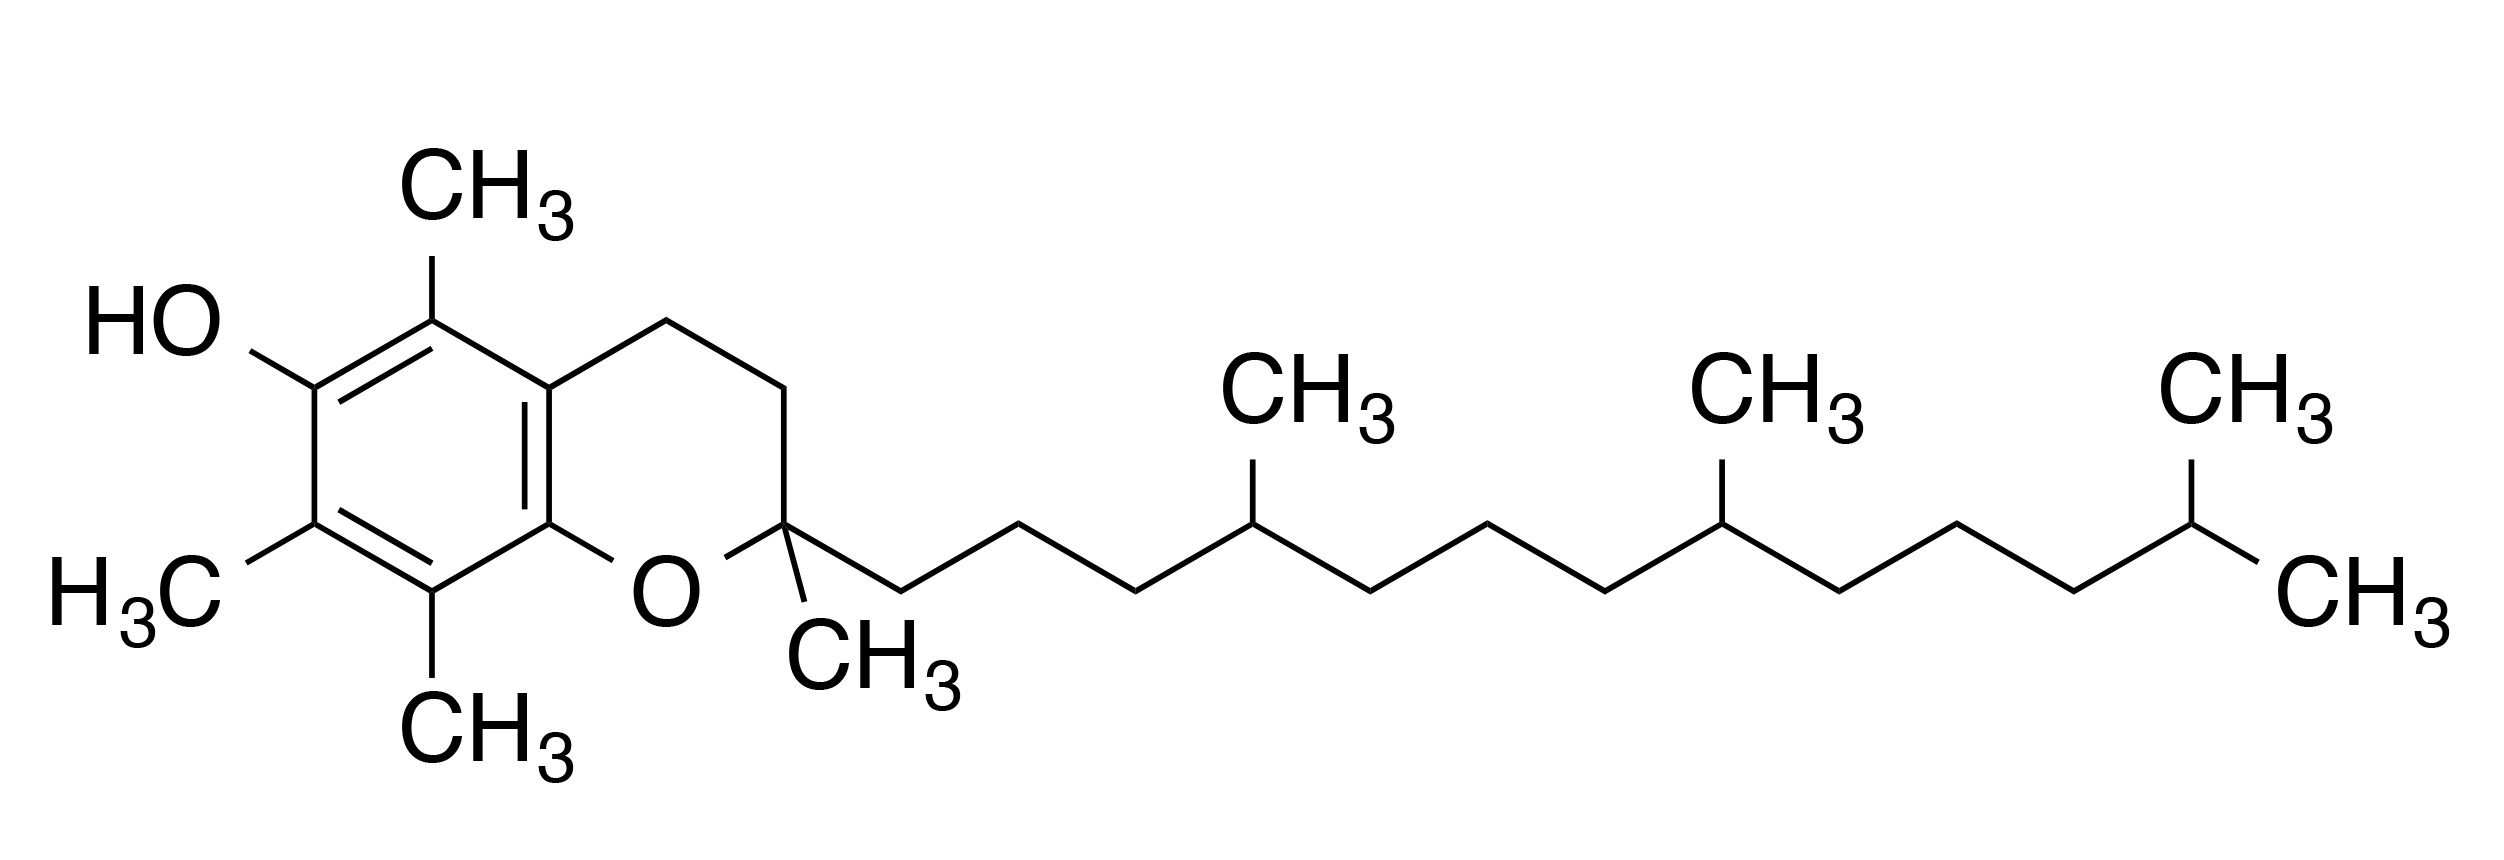 molecular structure of alpha-tocopherol